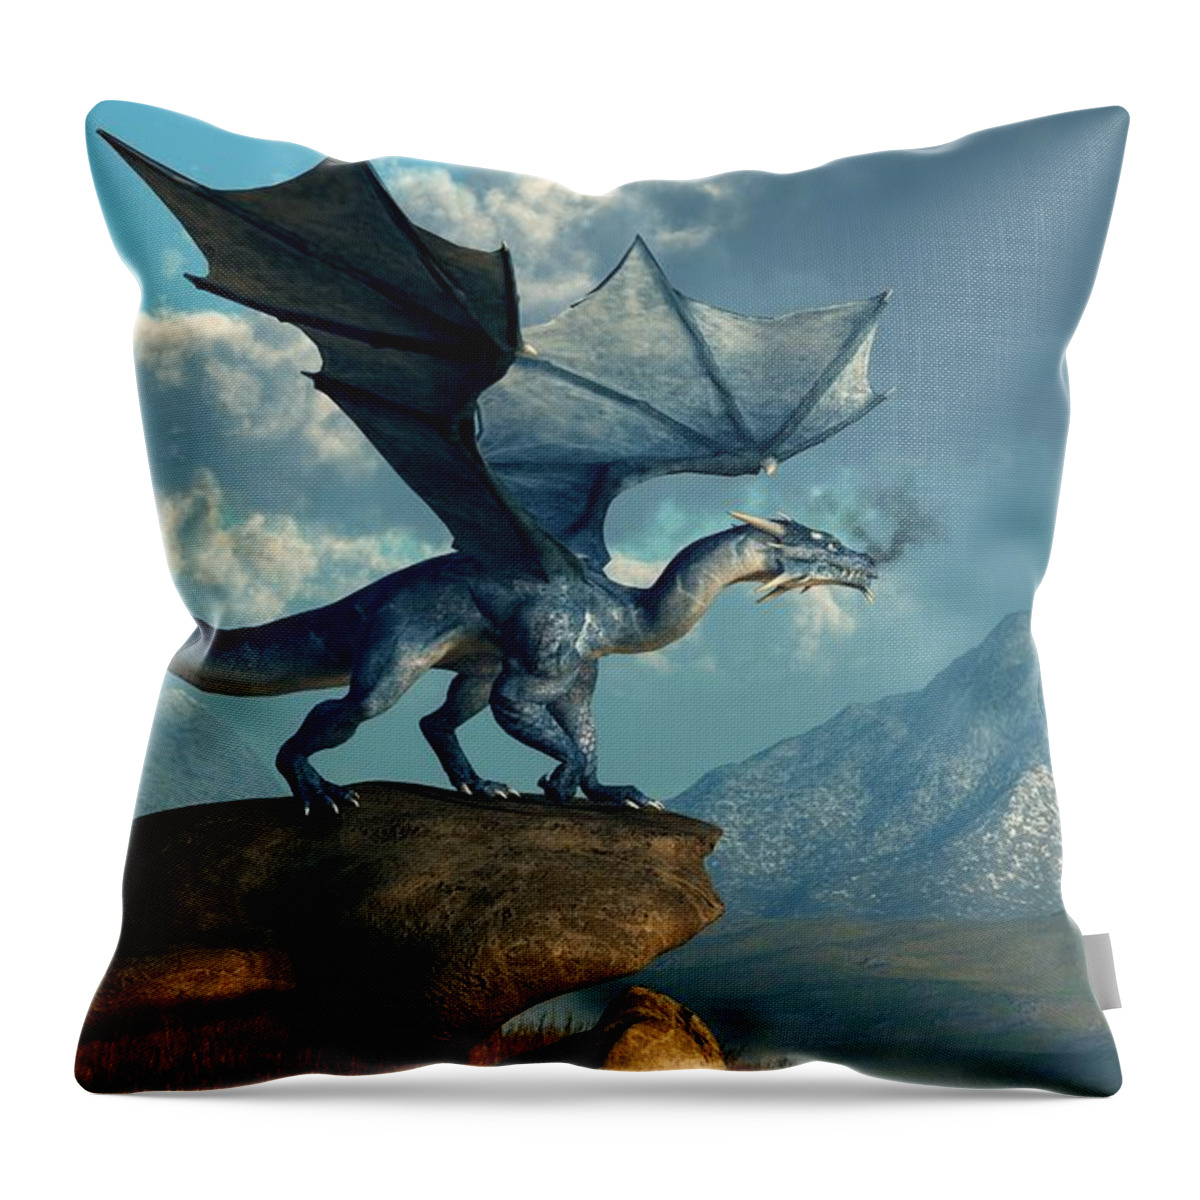 Blue Dragon Throw Pillow featuring the digital art Blue Dragon by Daniel Eskridge